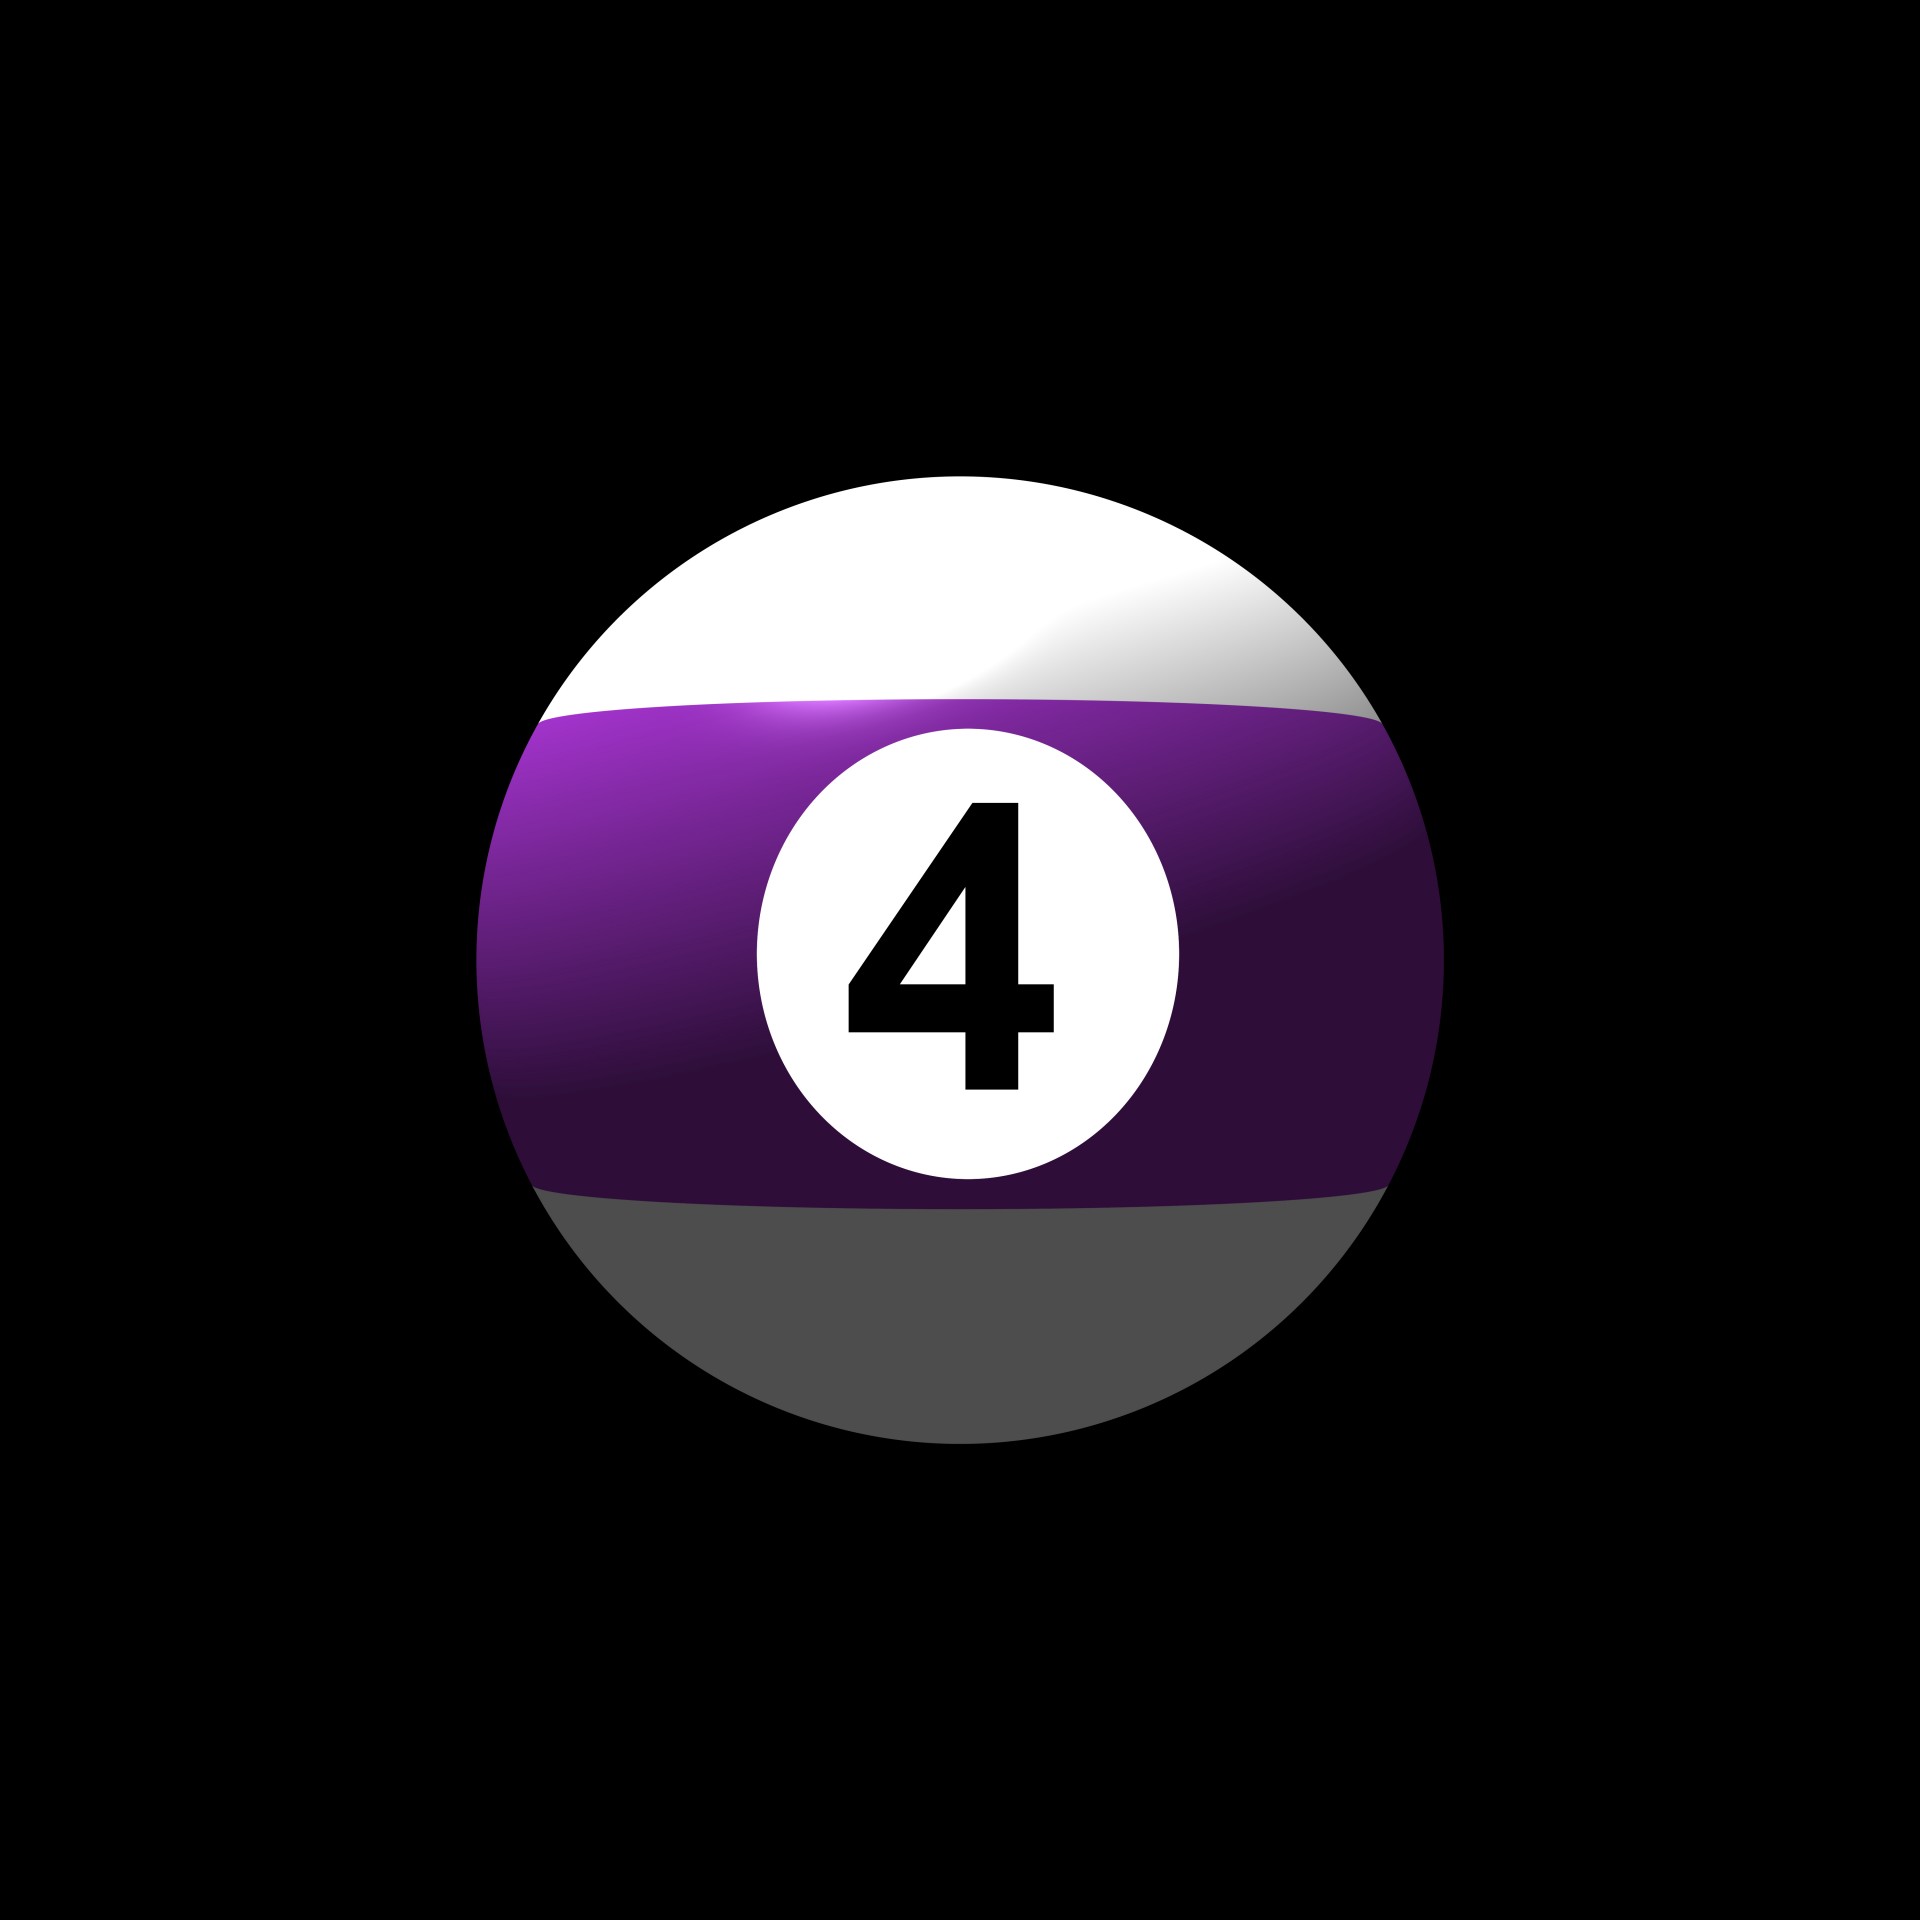 Бильярдный шар 4. Фиолетовый бильярдный шар. 4 Шарик бильярдный фиолетовый. Бильярдный шар фиолетовая рисунок.